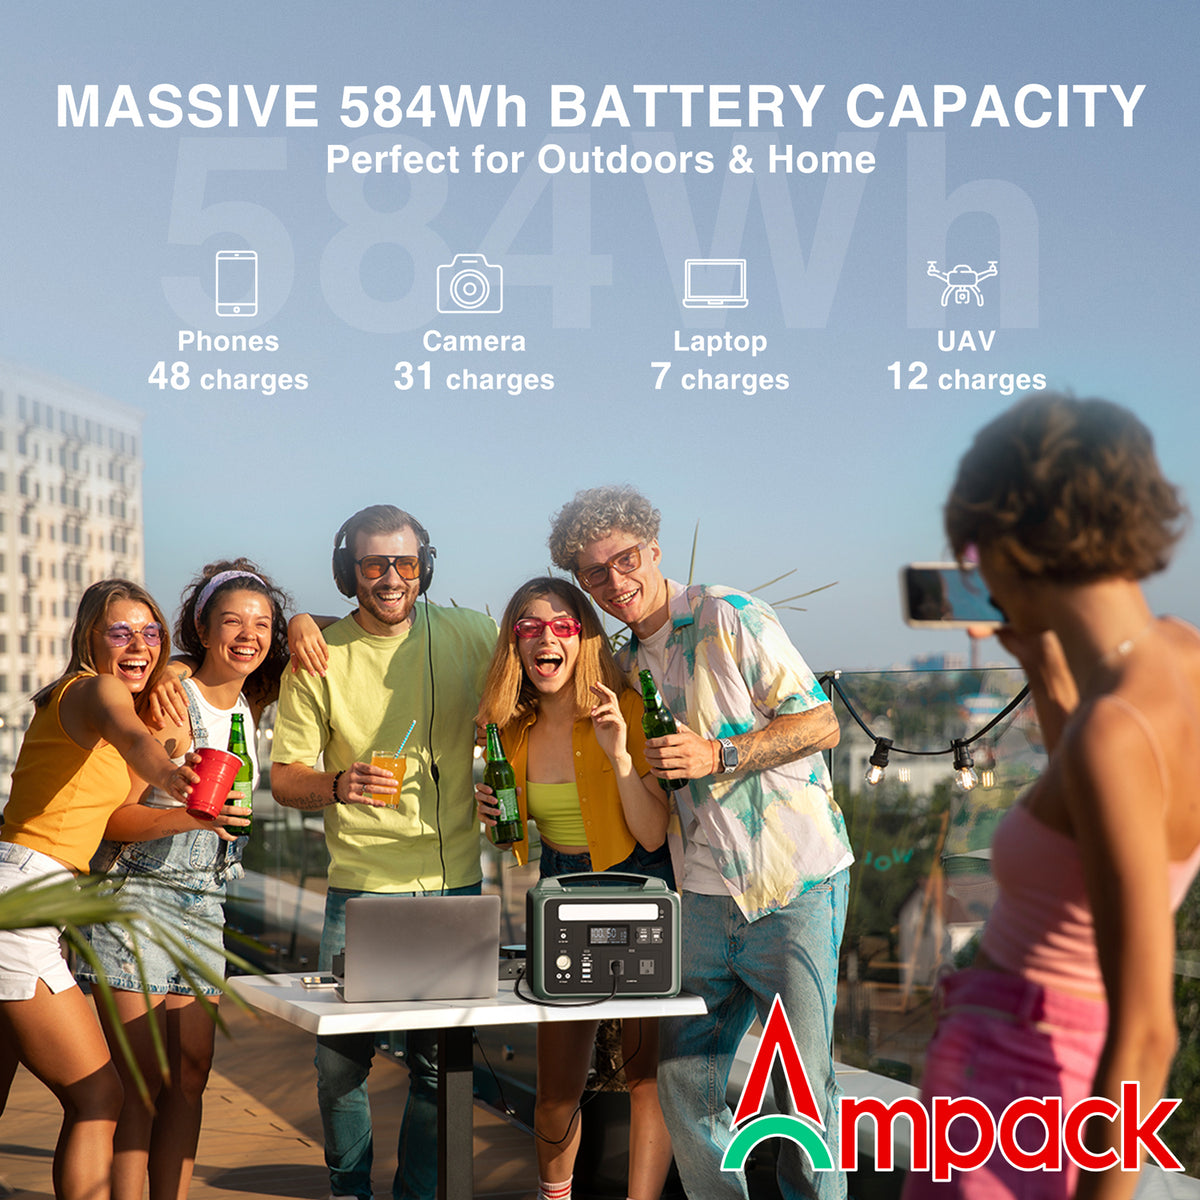 Ampack Portable Power Station 600W (Peak 1800W)